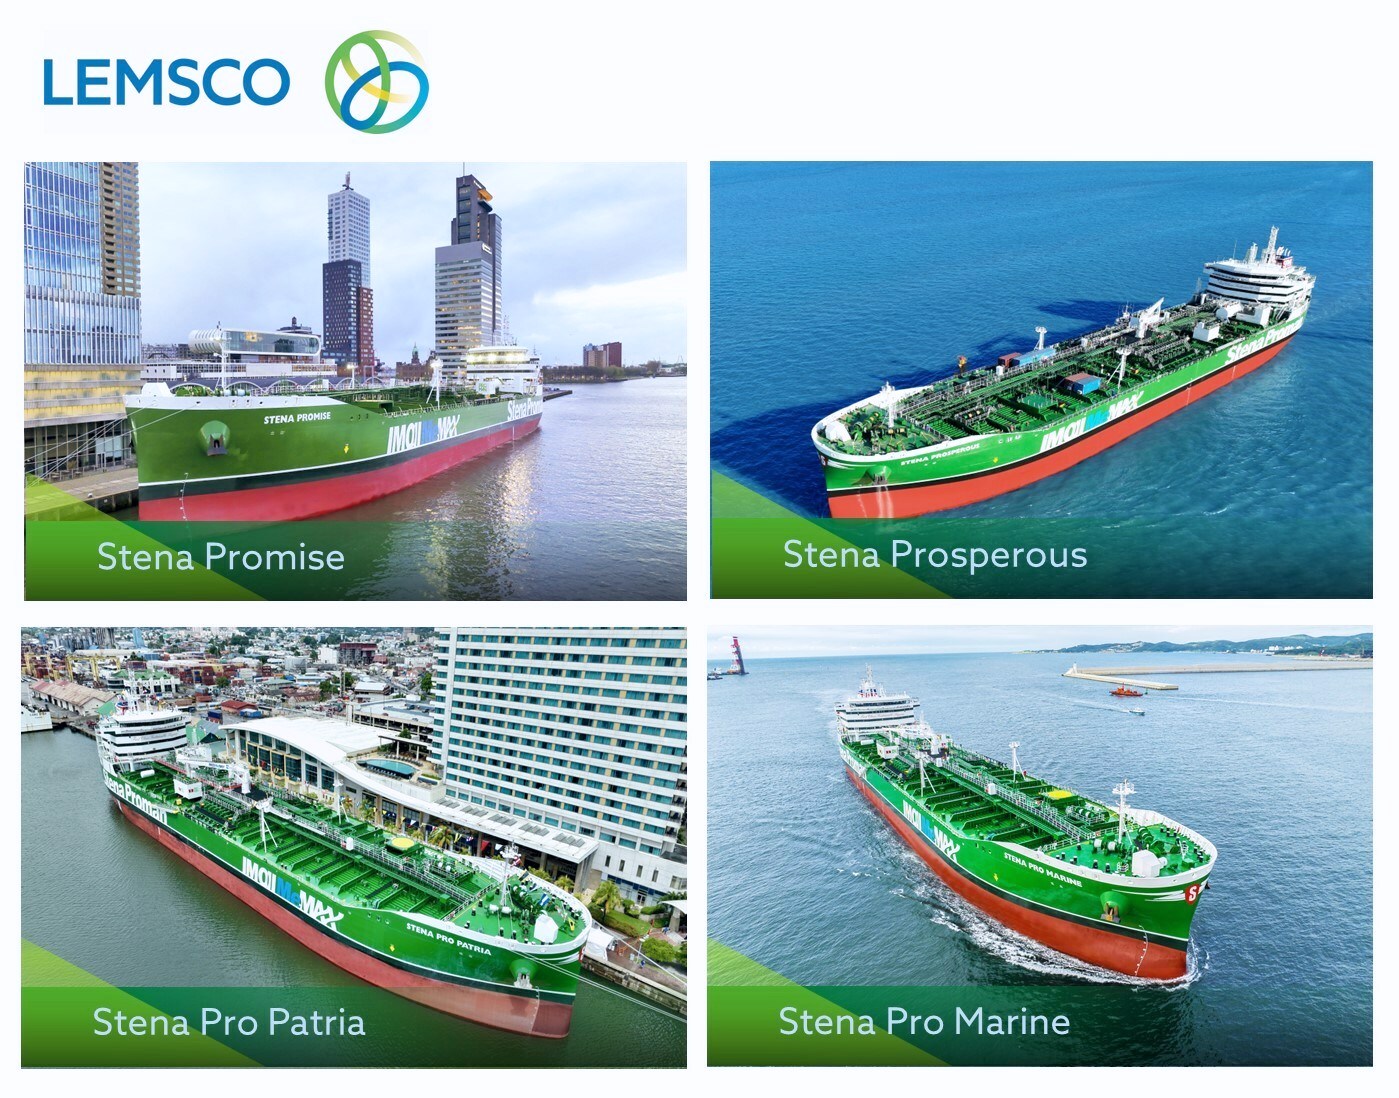 Bild: LEMSCO Vessels